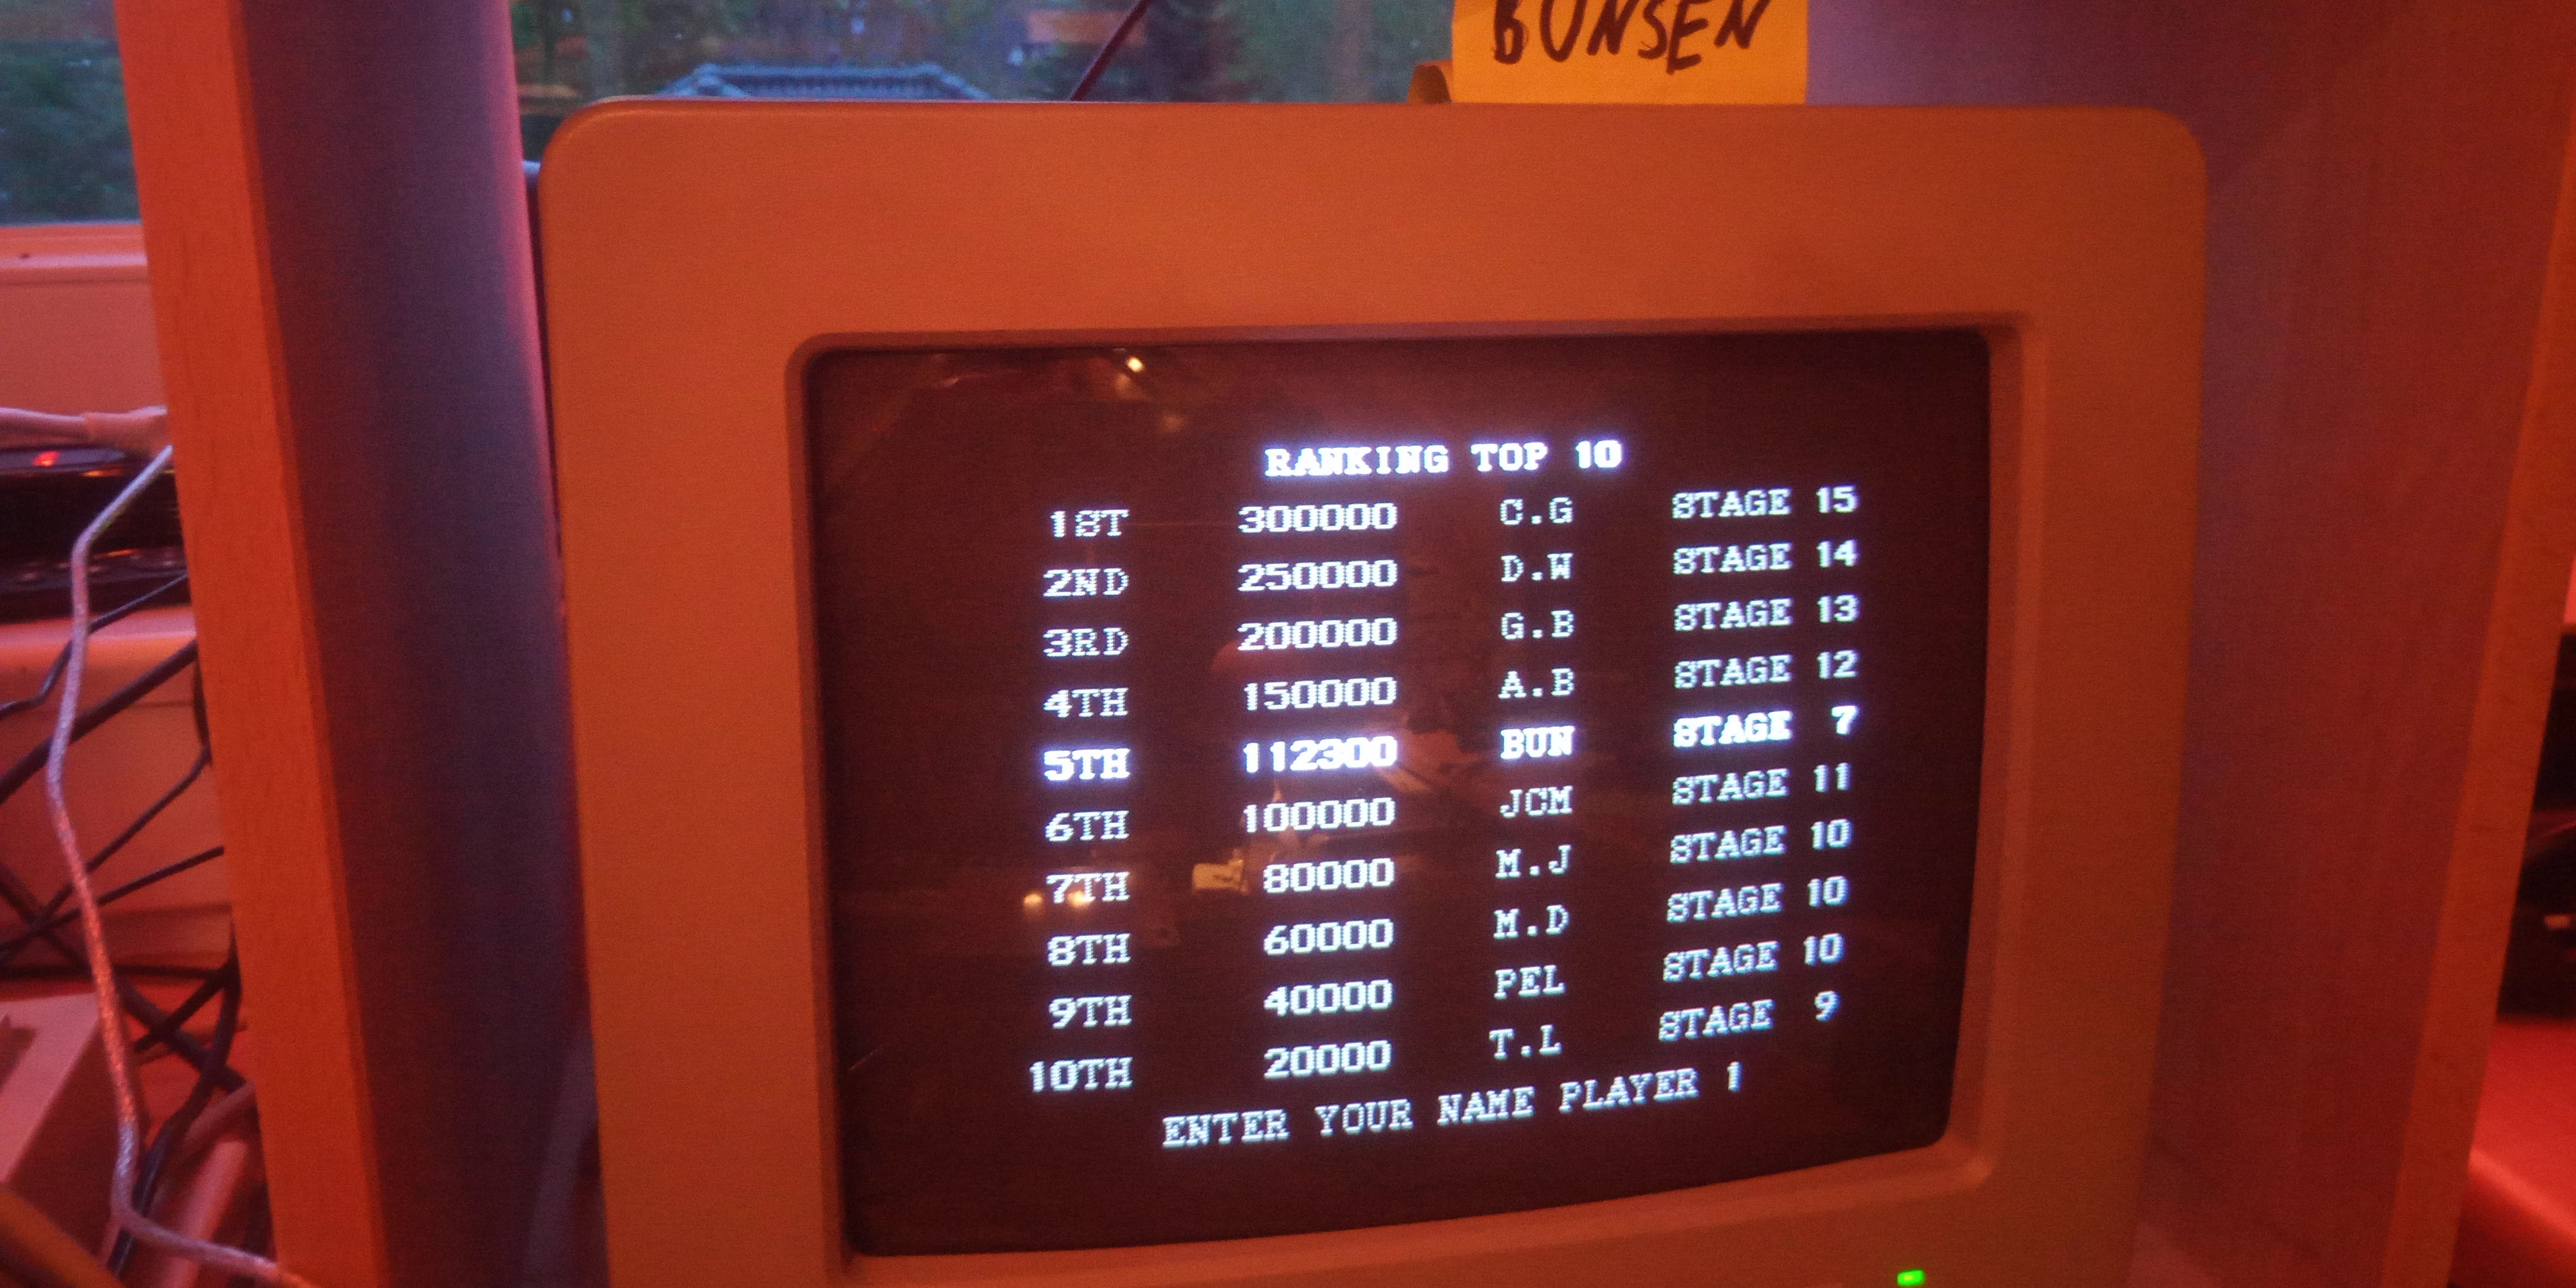 Bunsen: Pang [Easy] (Atari ST) 112,300 points on 2021-05-24 13:42:46